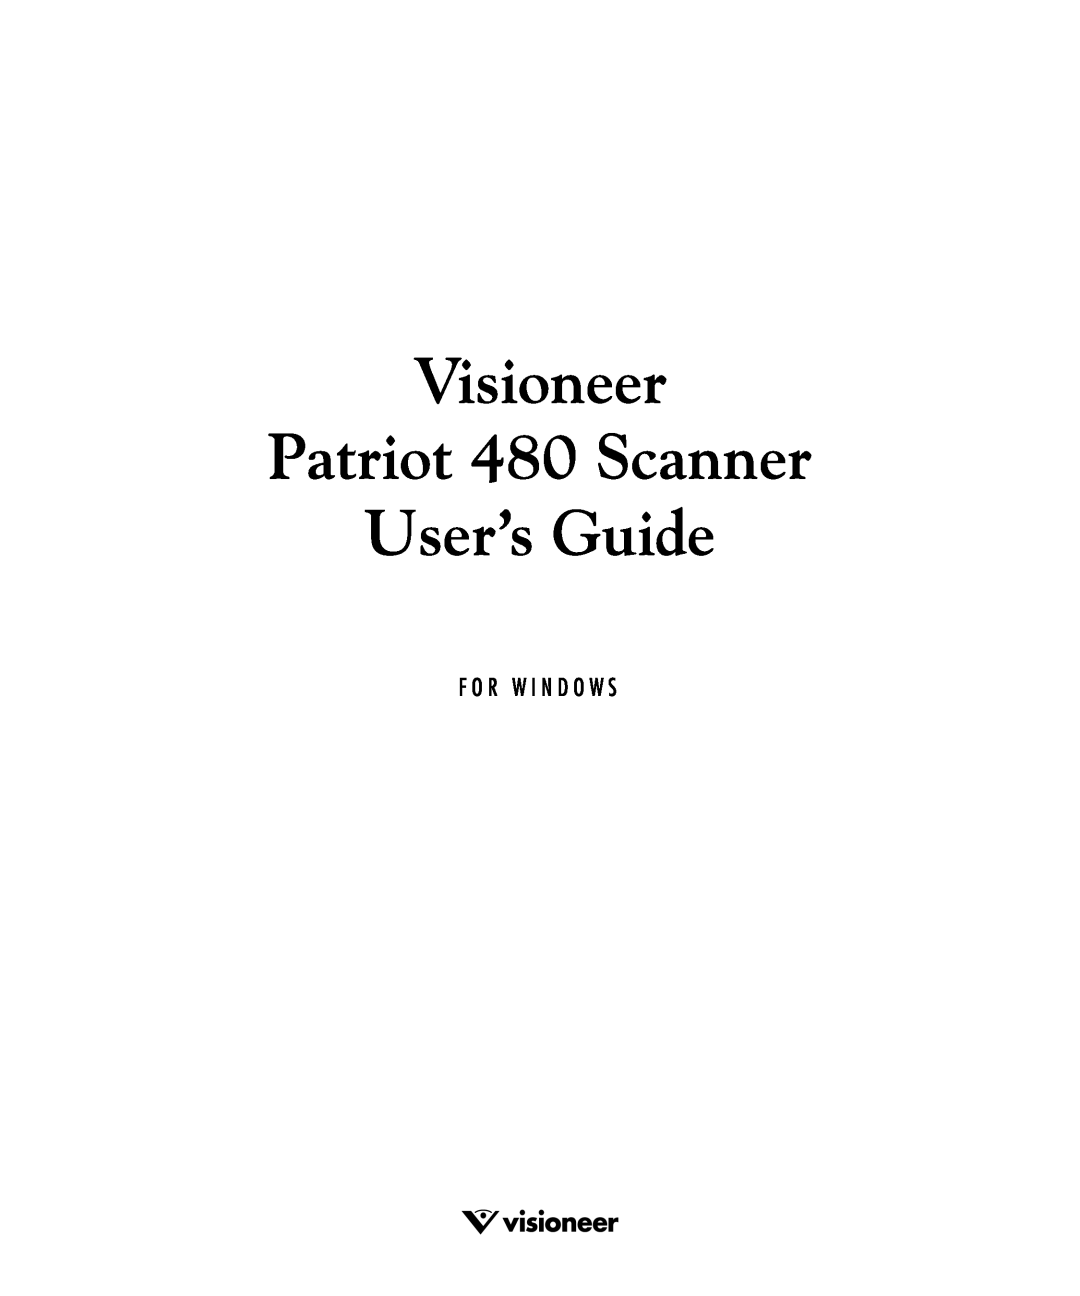 Visioneer manual Visioneer Patriot 480 Scanner User’s Guide, F O R W I N D O W S 